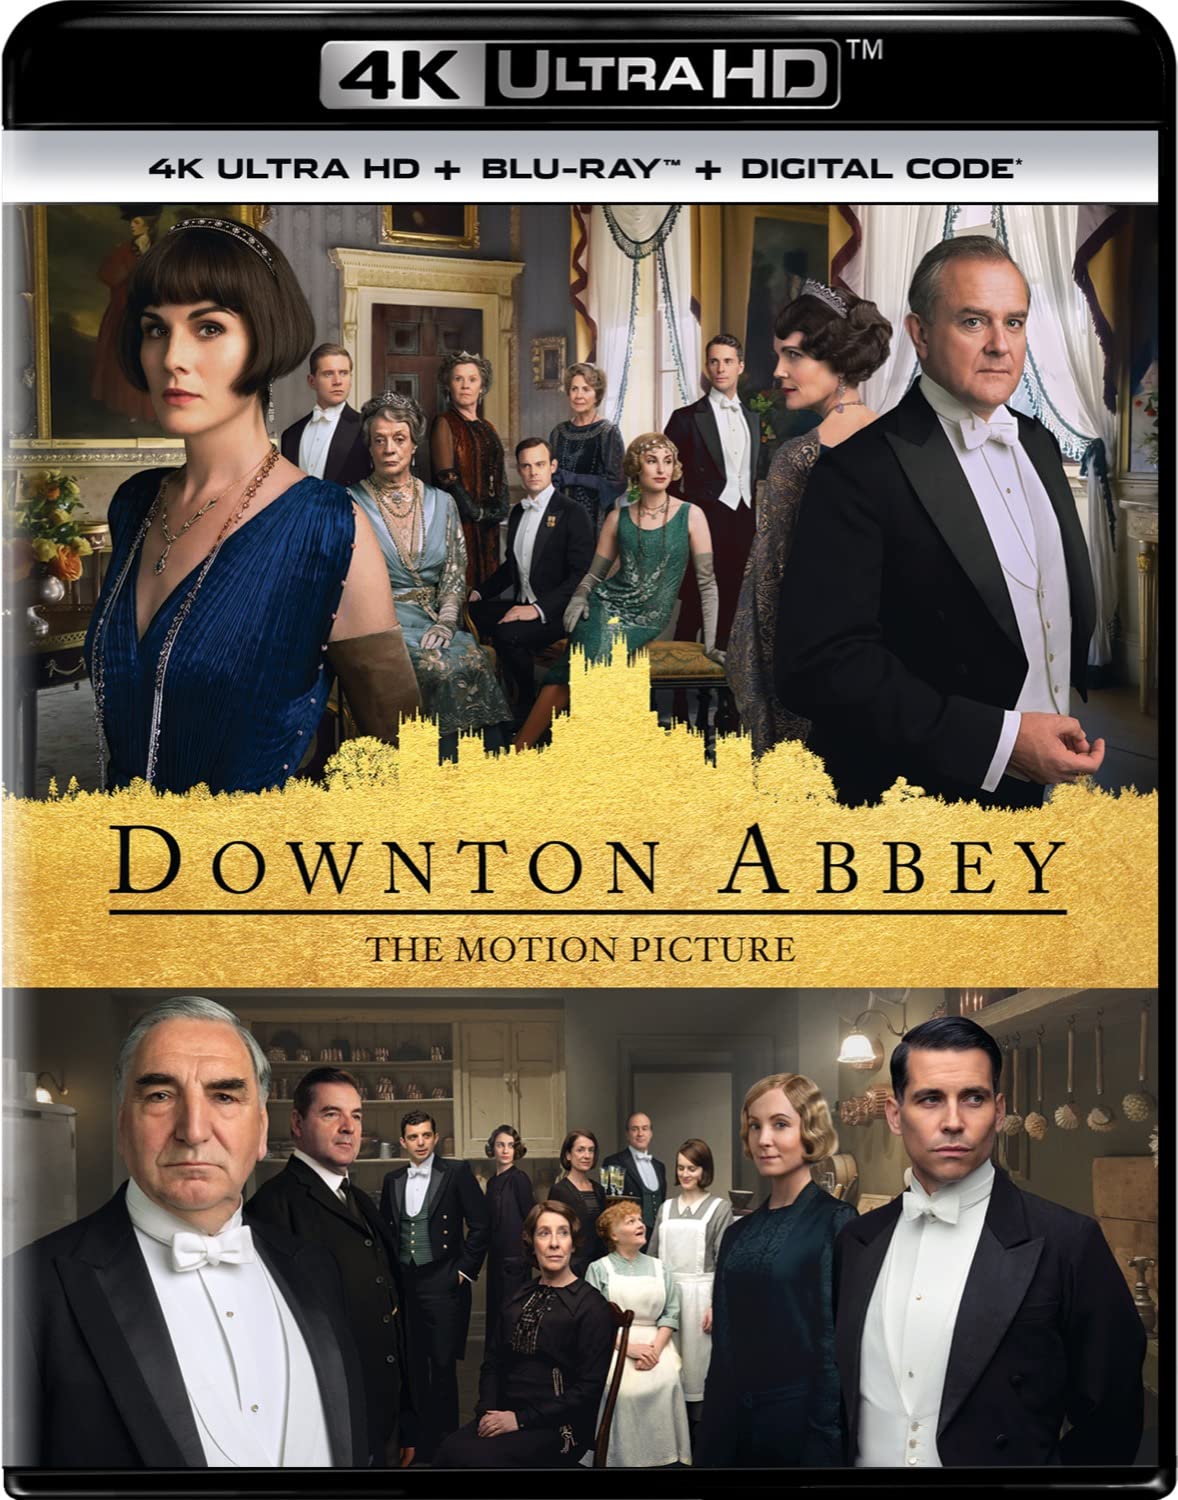 Downton Abbey Motion Picture 4k Blu-ray